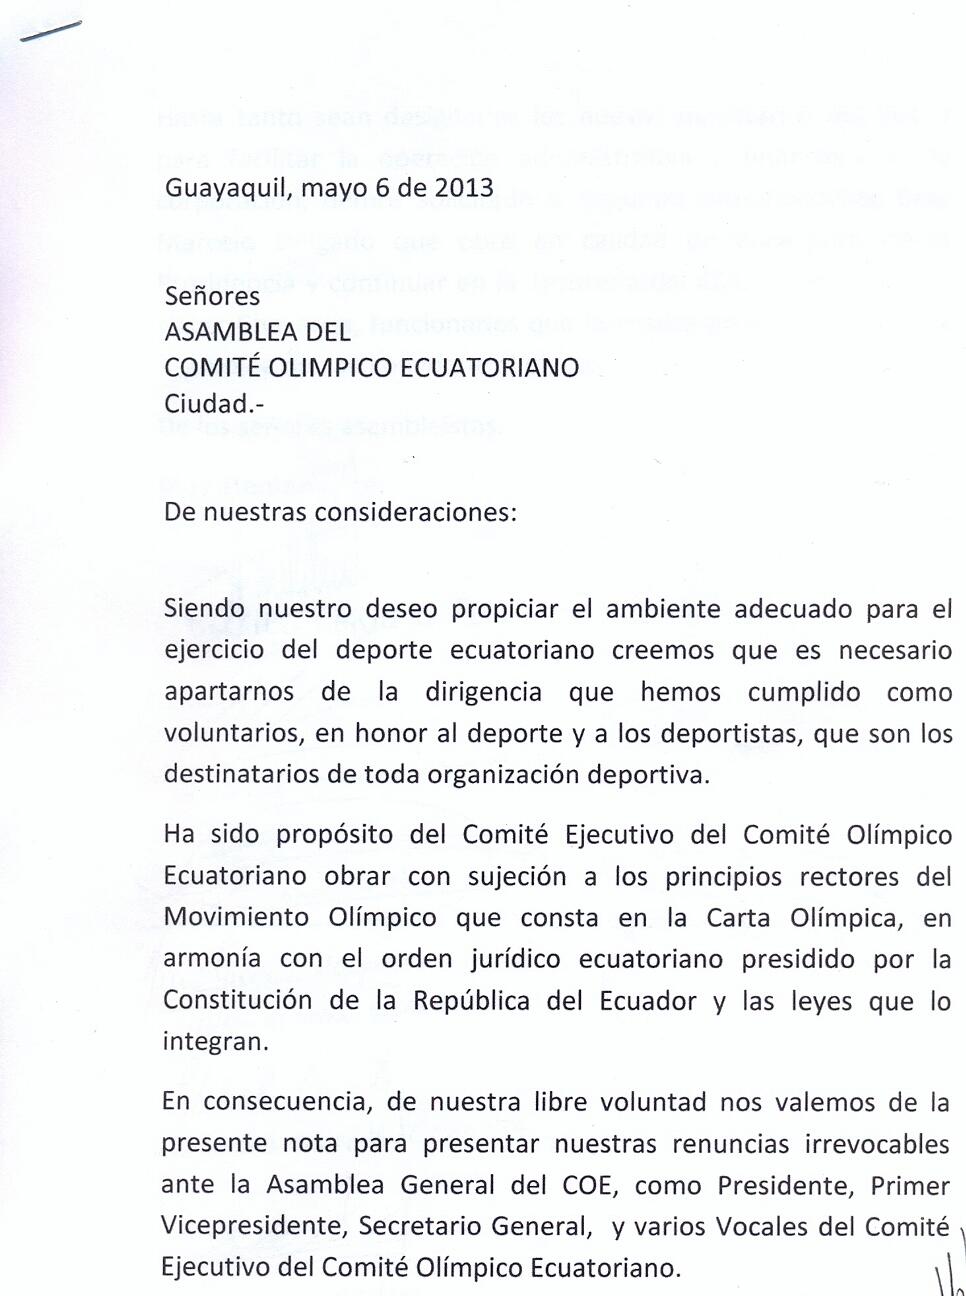 Nicolás Di Nápoli on Twitter: ""@ECUADORolimpico: Carta de 